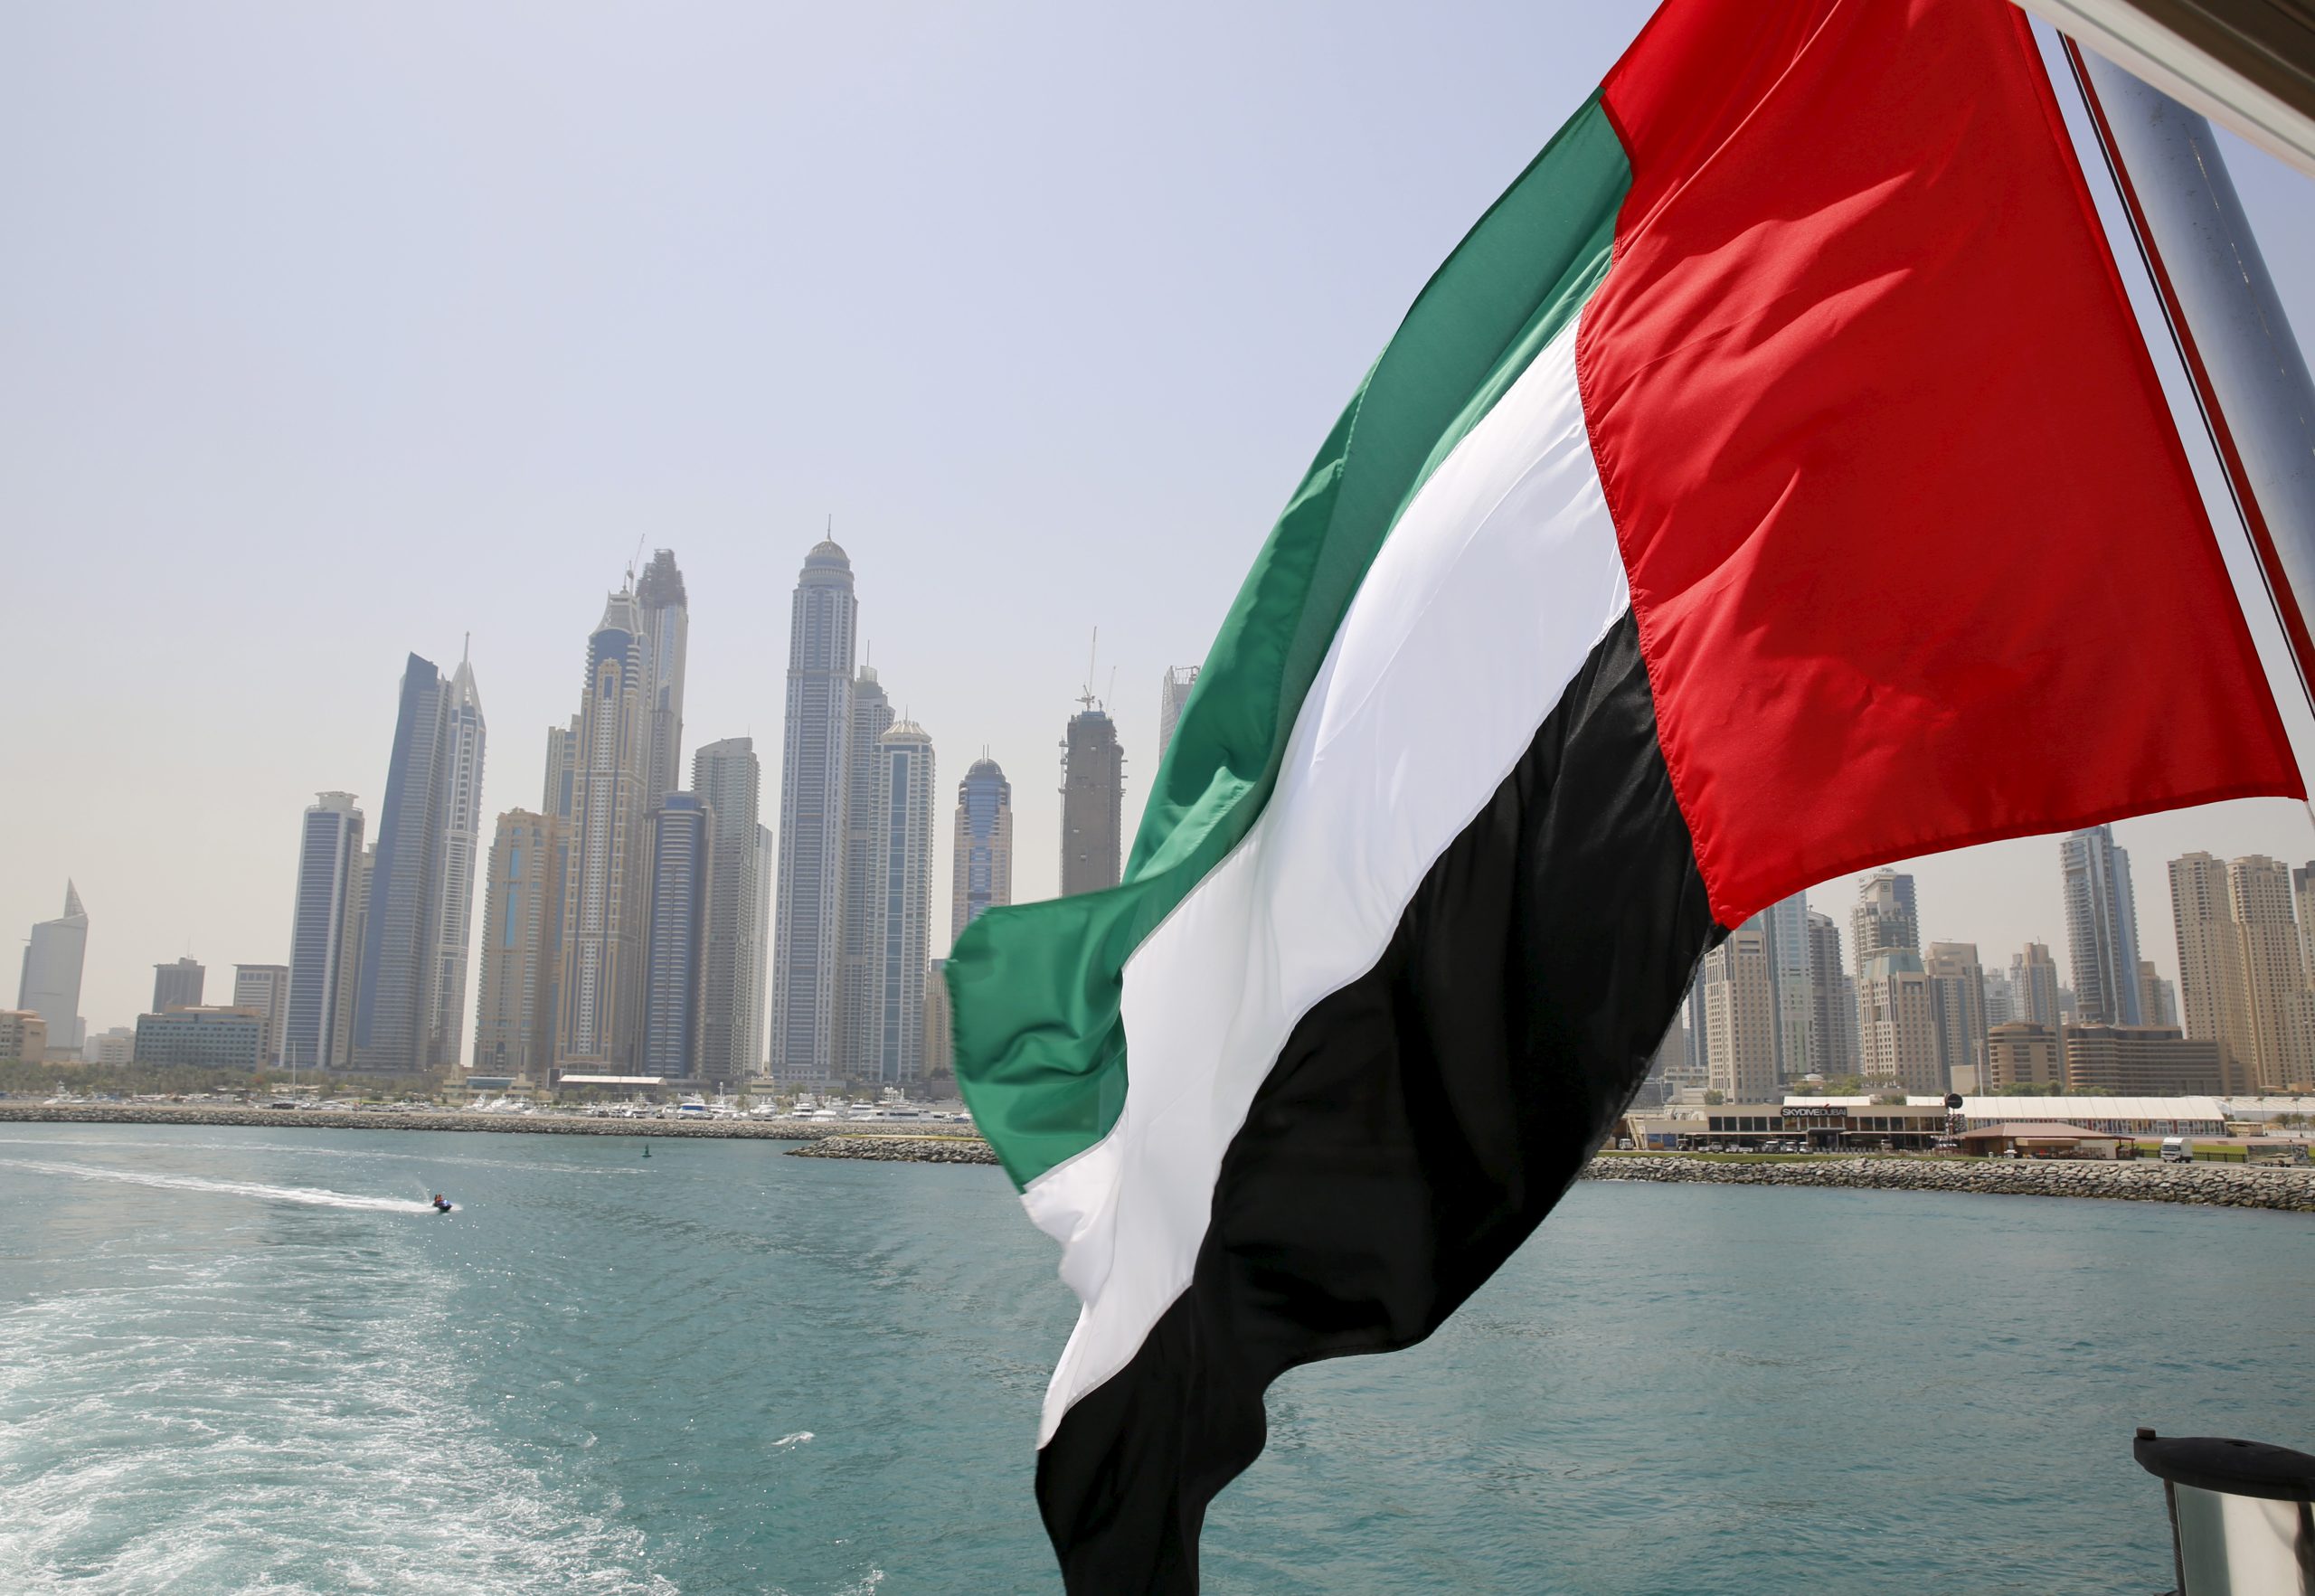 Photo: UAE flag flies over a boat at Dubai Marina, Dubai, United Arab Emirates May 22, 2015. Credit: REUTERS/Ahmed Jadallah